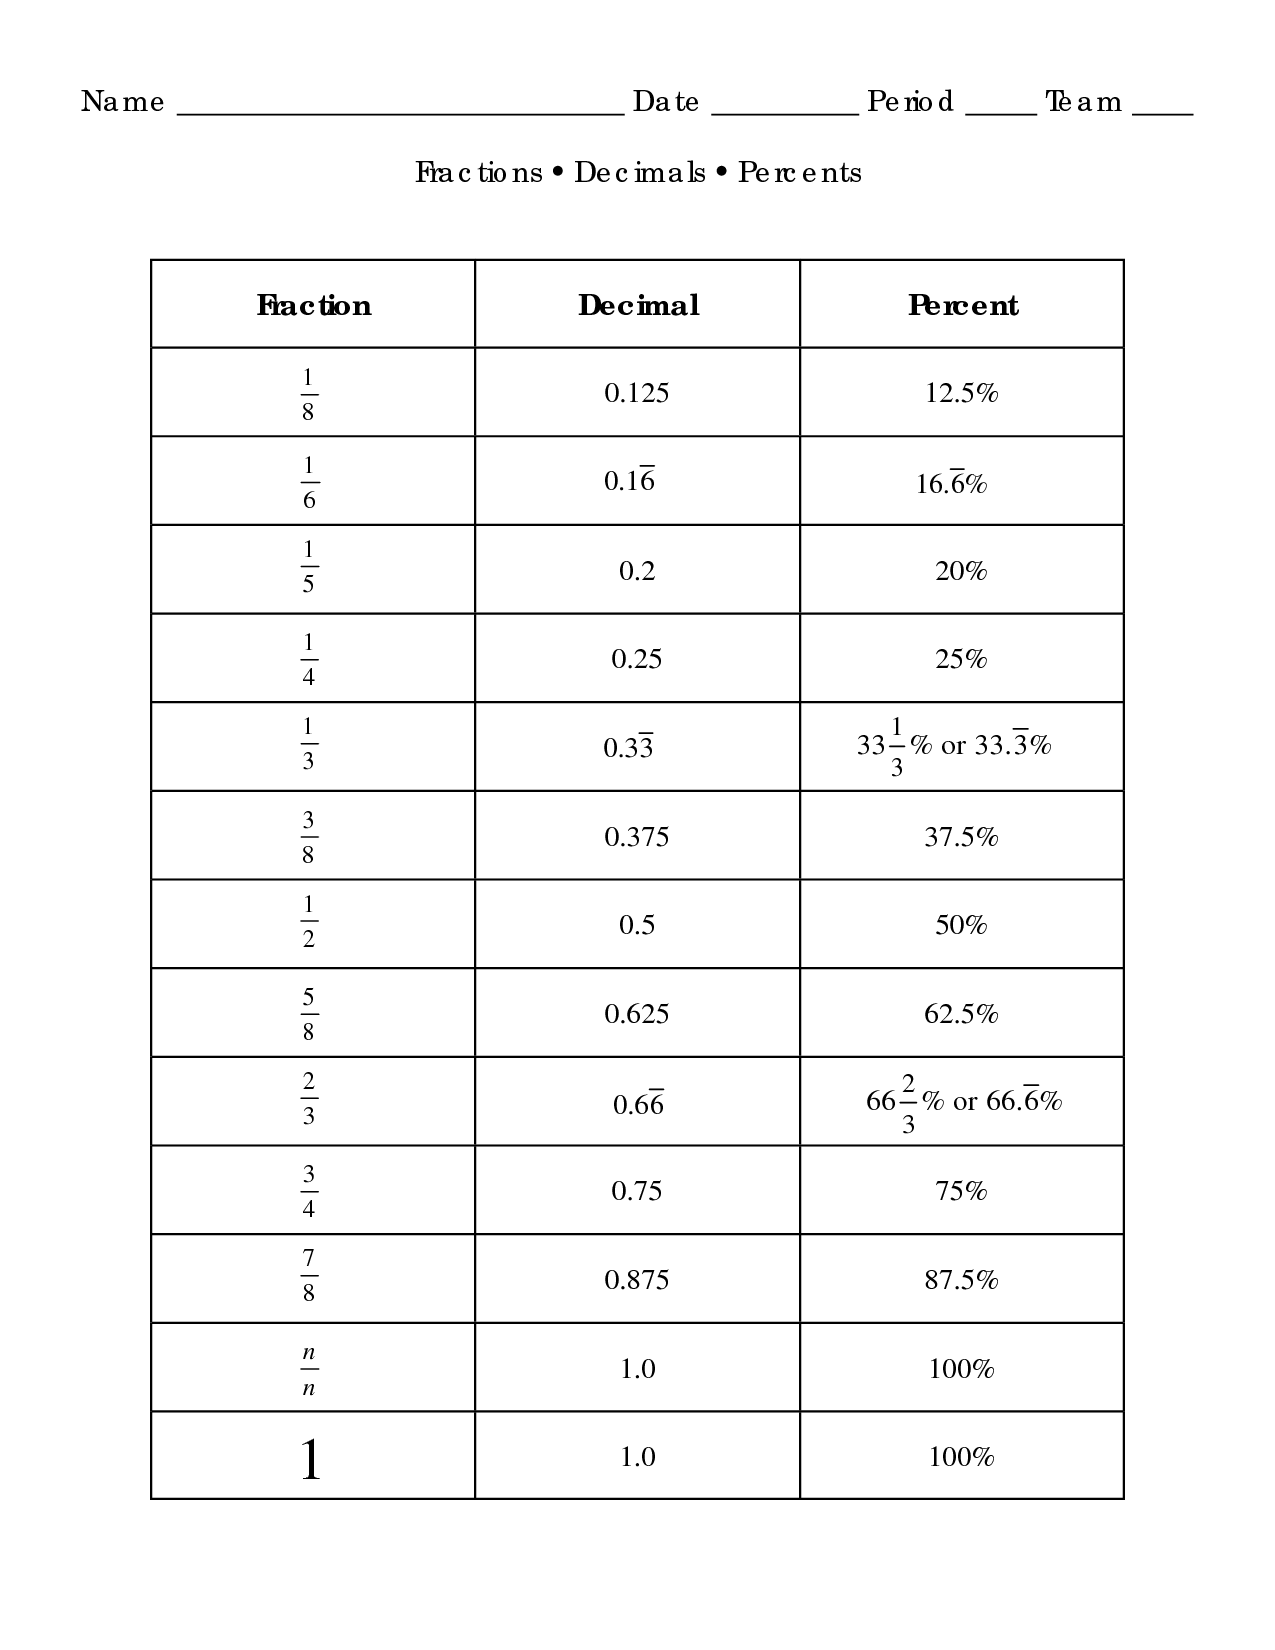 fraction-decimal-percentage-table